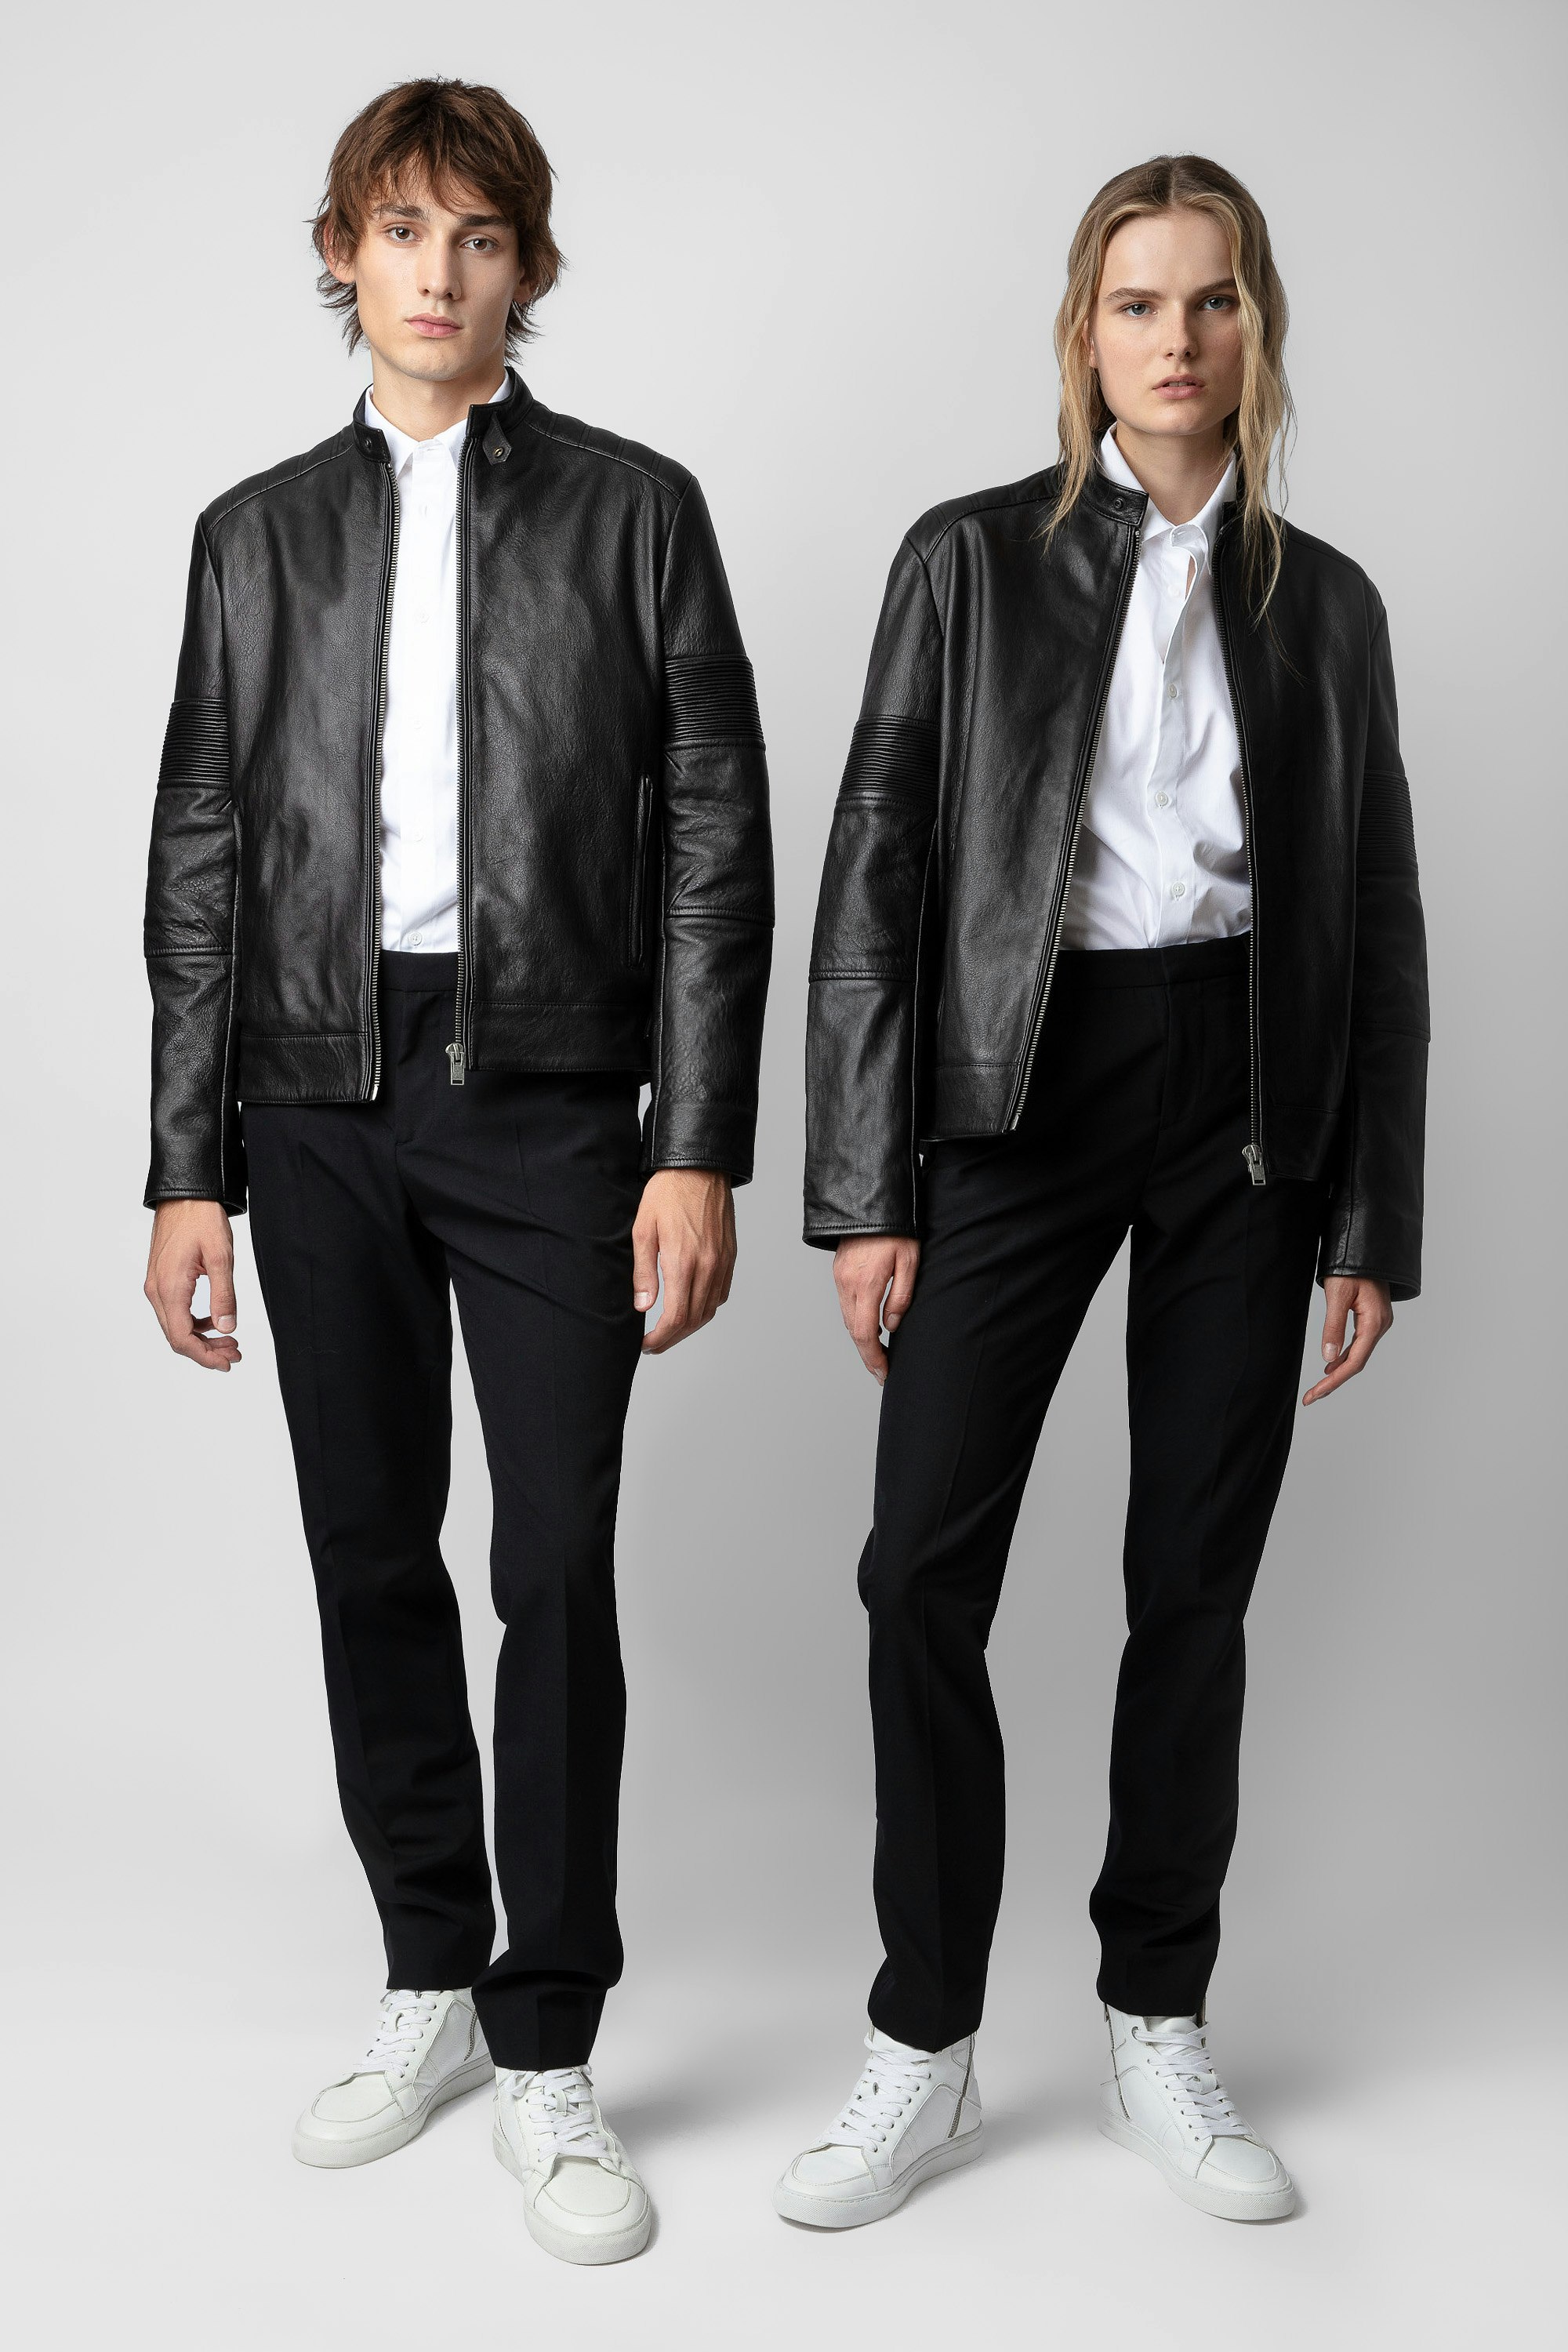 Lean Leather Jacket - Unisex’s anthracite leather biker jacket.